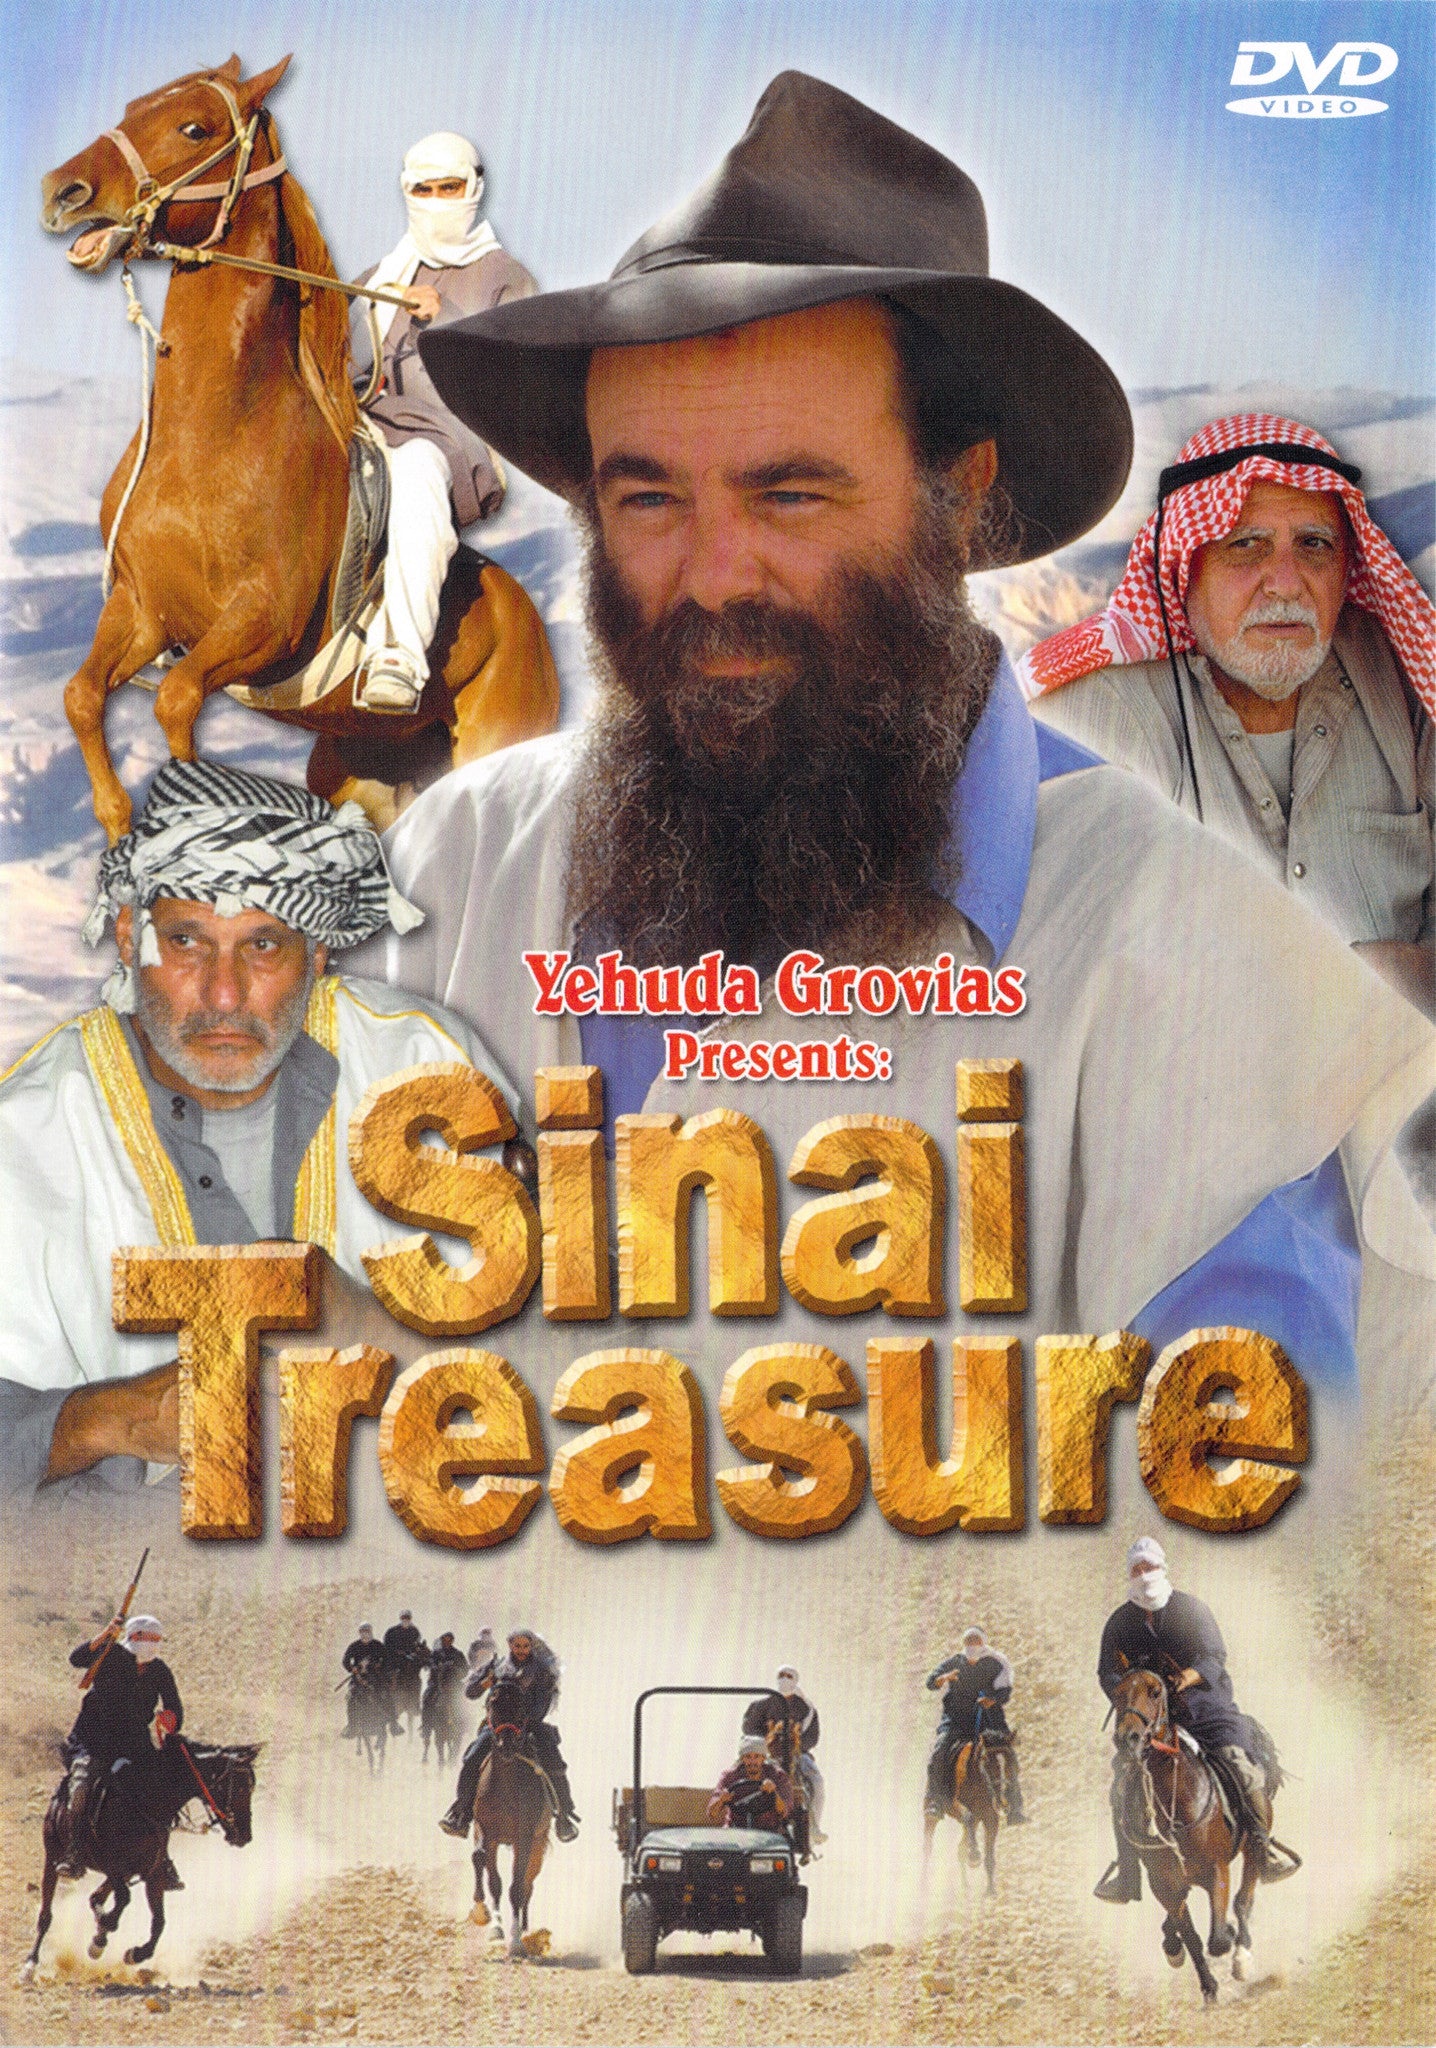 Growise Brothers - The Sinai Treasure